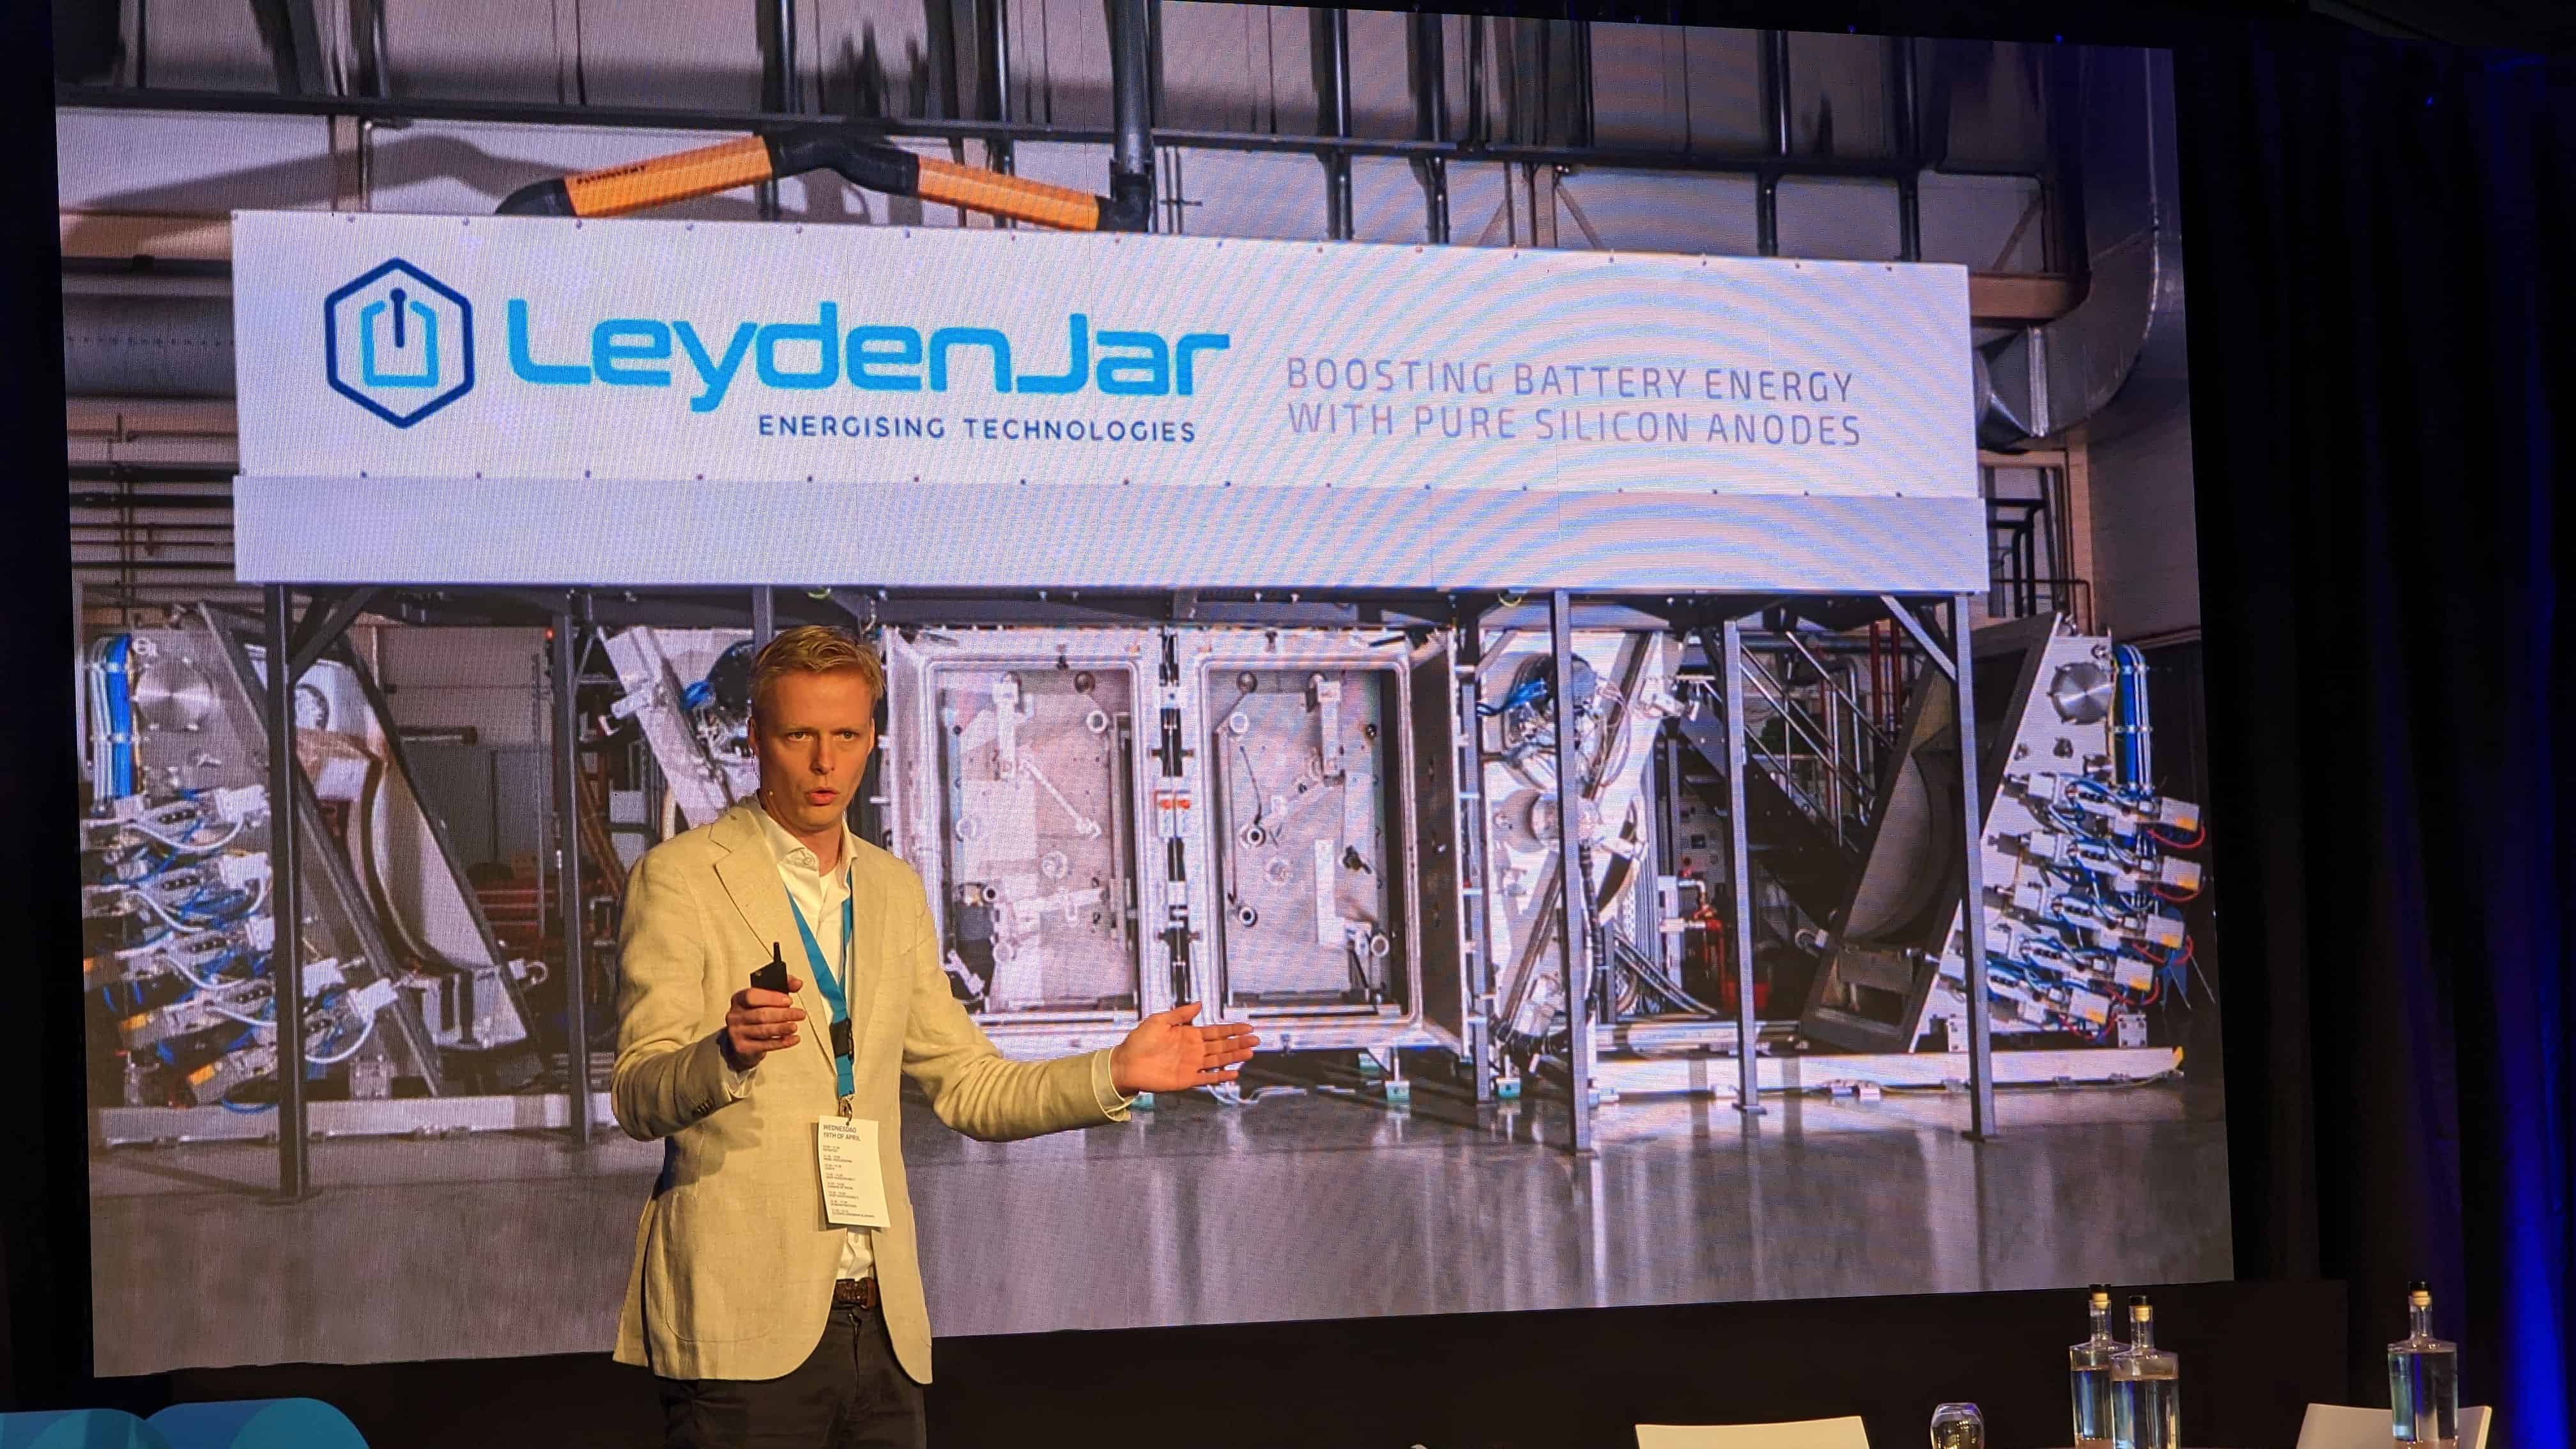 Ewout Lubberman, head of product, LeydenJar